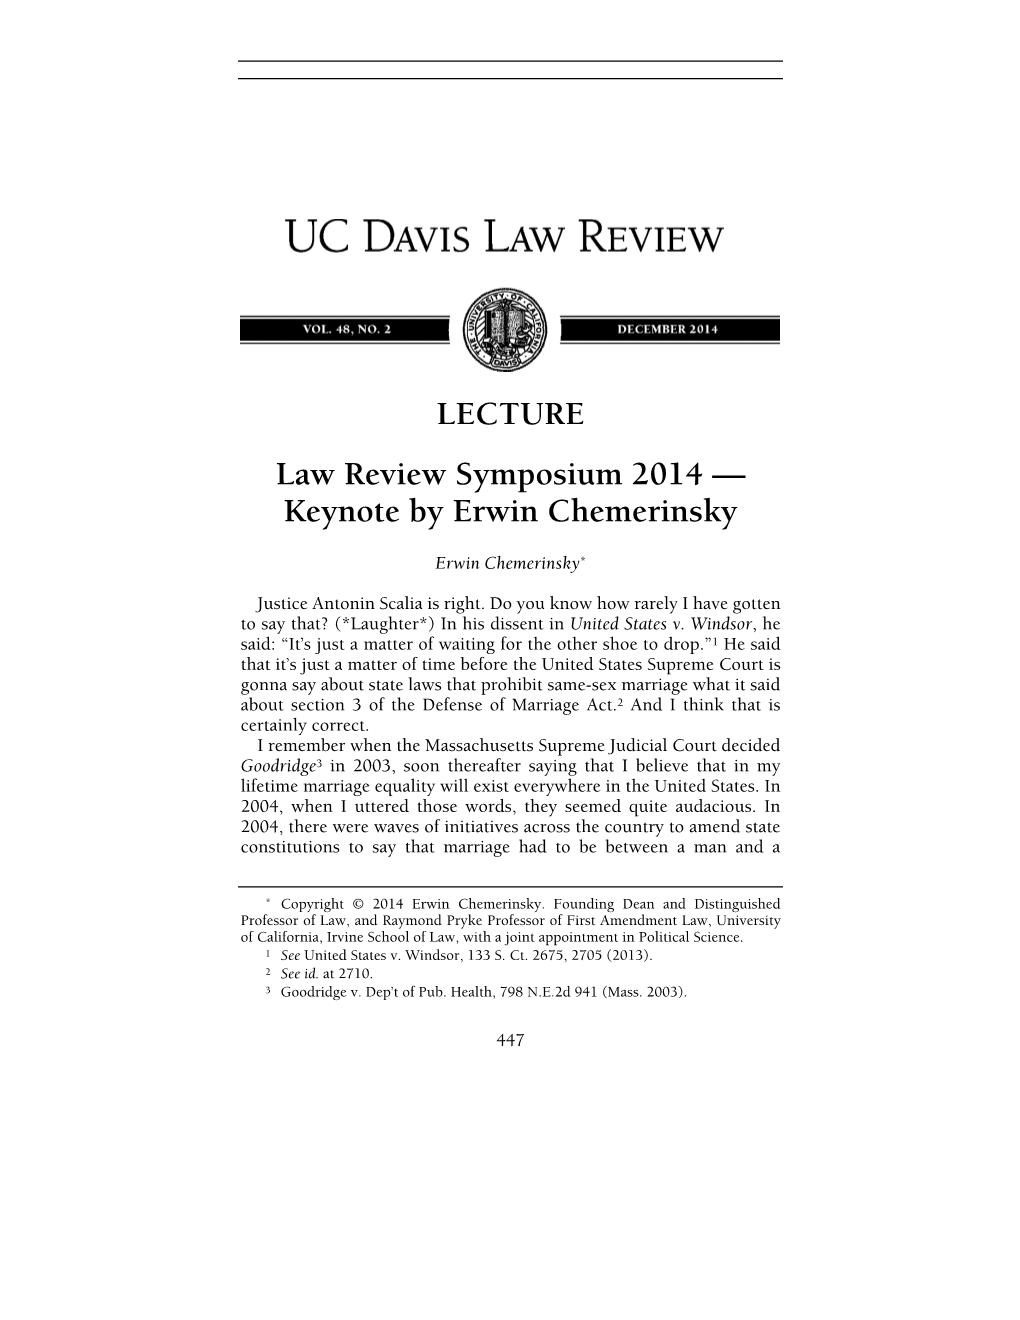 Law Review Symposium 2014 — Keynote by Erwin Chemerinsky